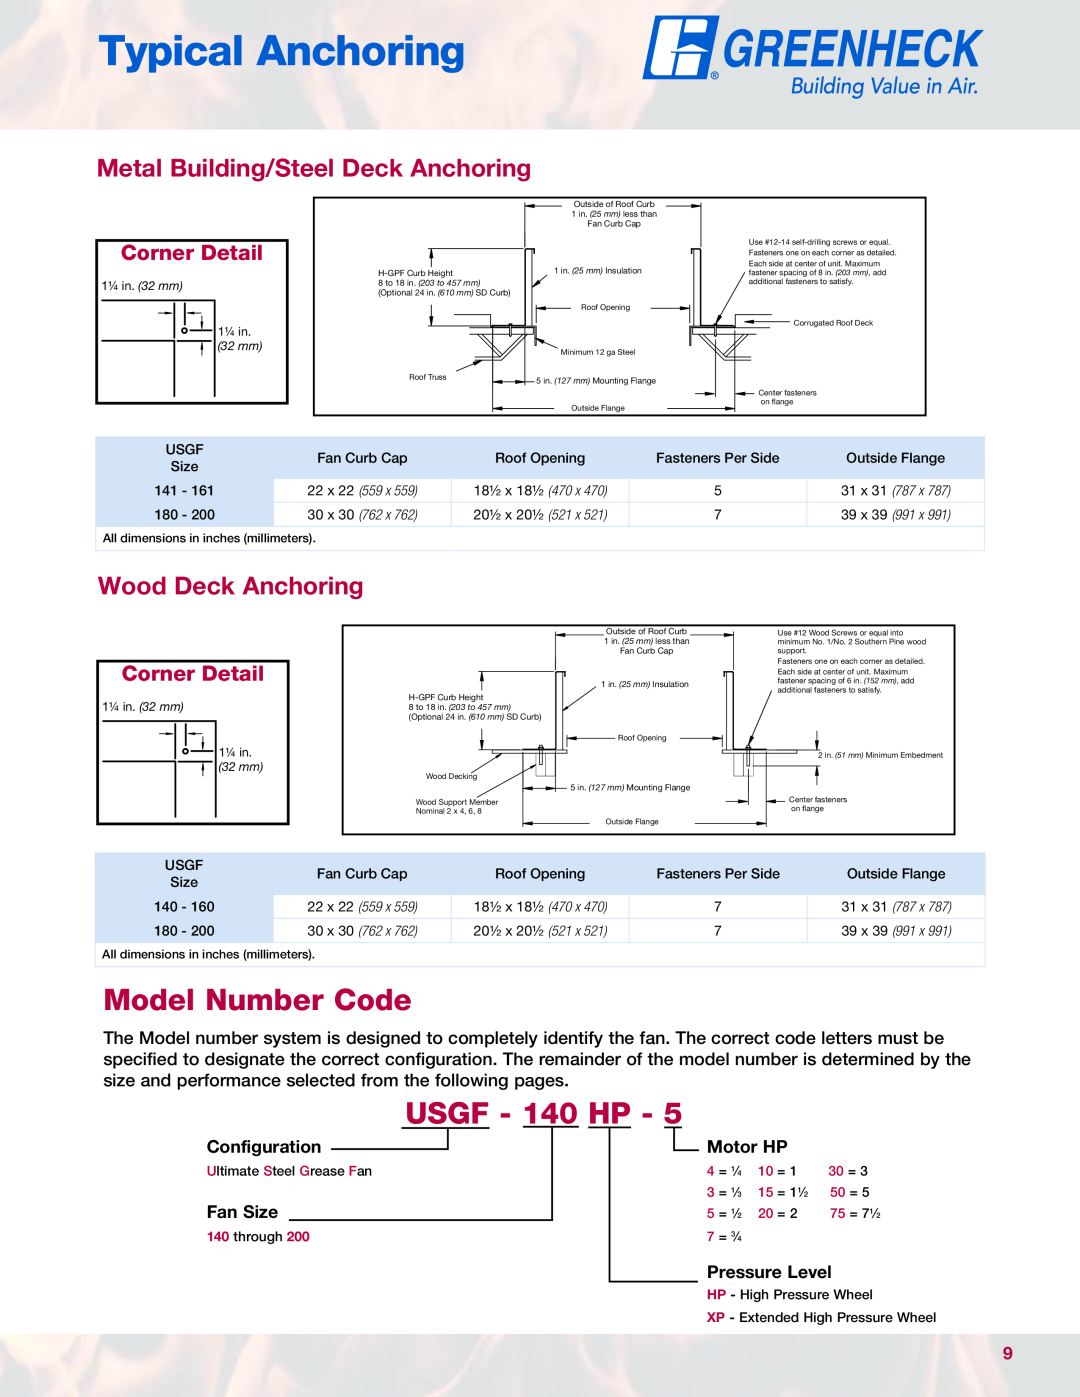 Greenheck Fan Typical Anchoring, Model Number Code, USGF - 140 HP, Metal Building/Steel Deck Anchoring, Corner Detail 